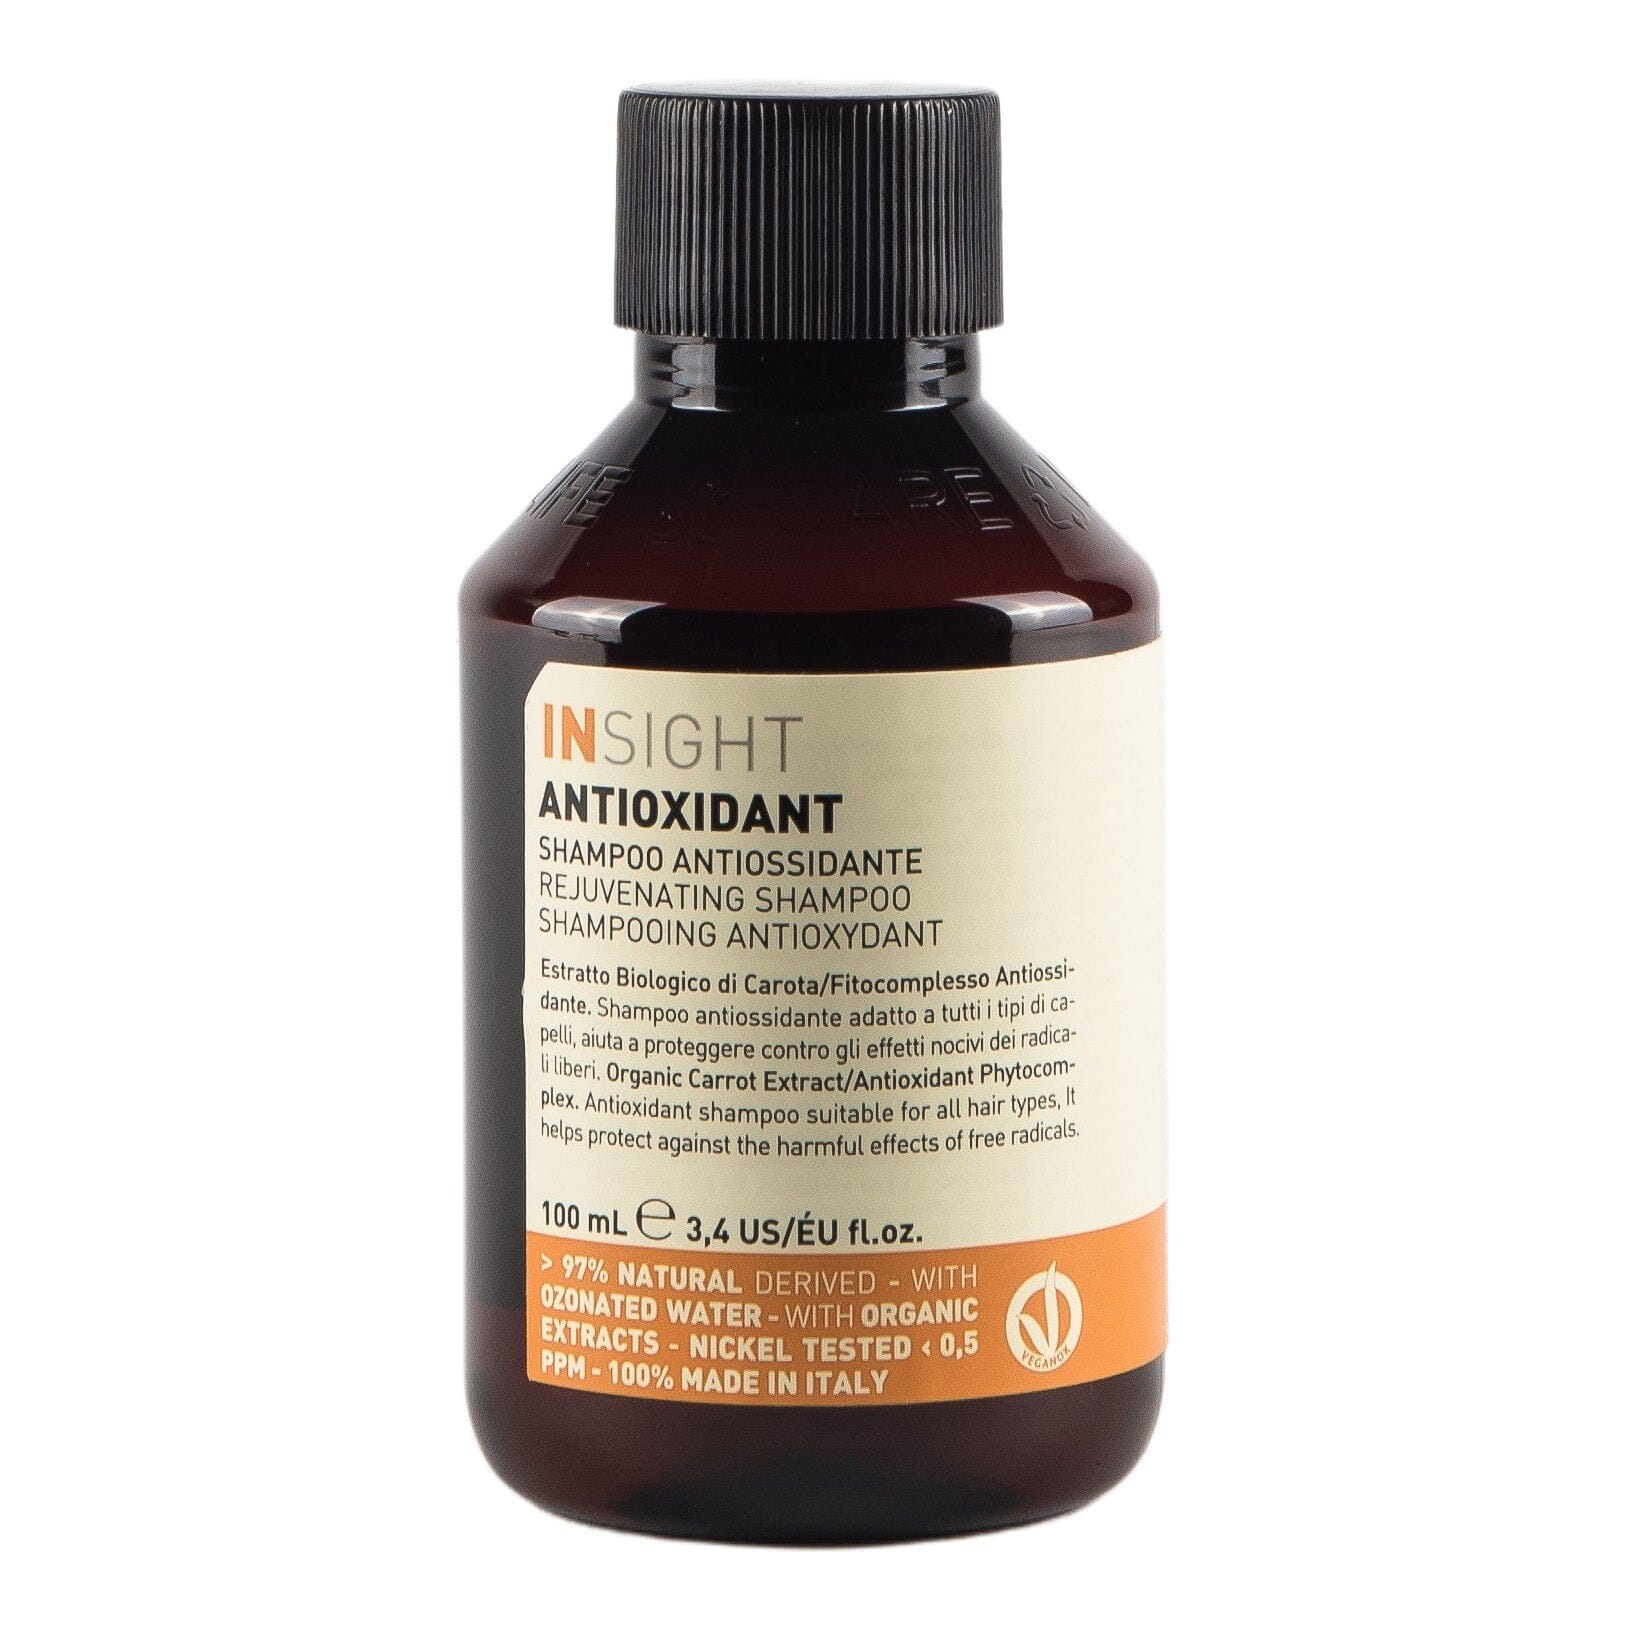 Insight Antioxidant - Rejuvenating sjampo 100 ml